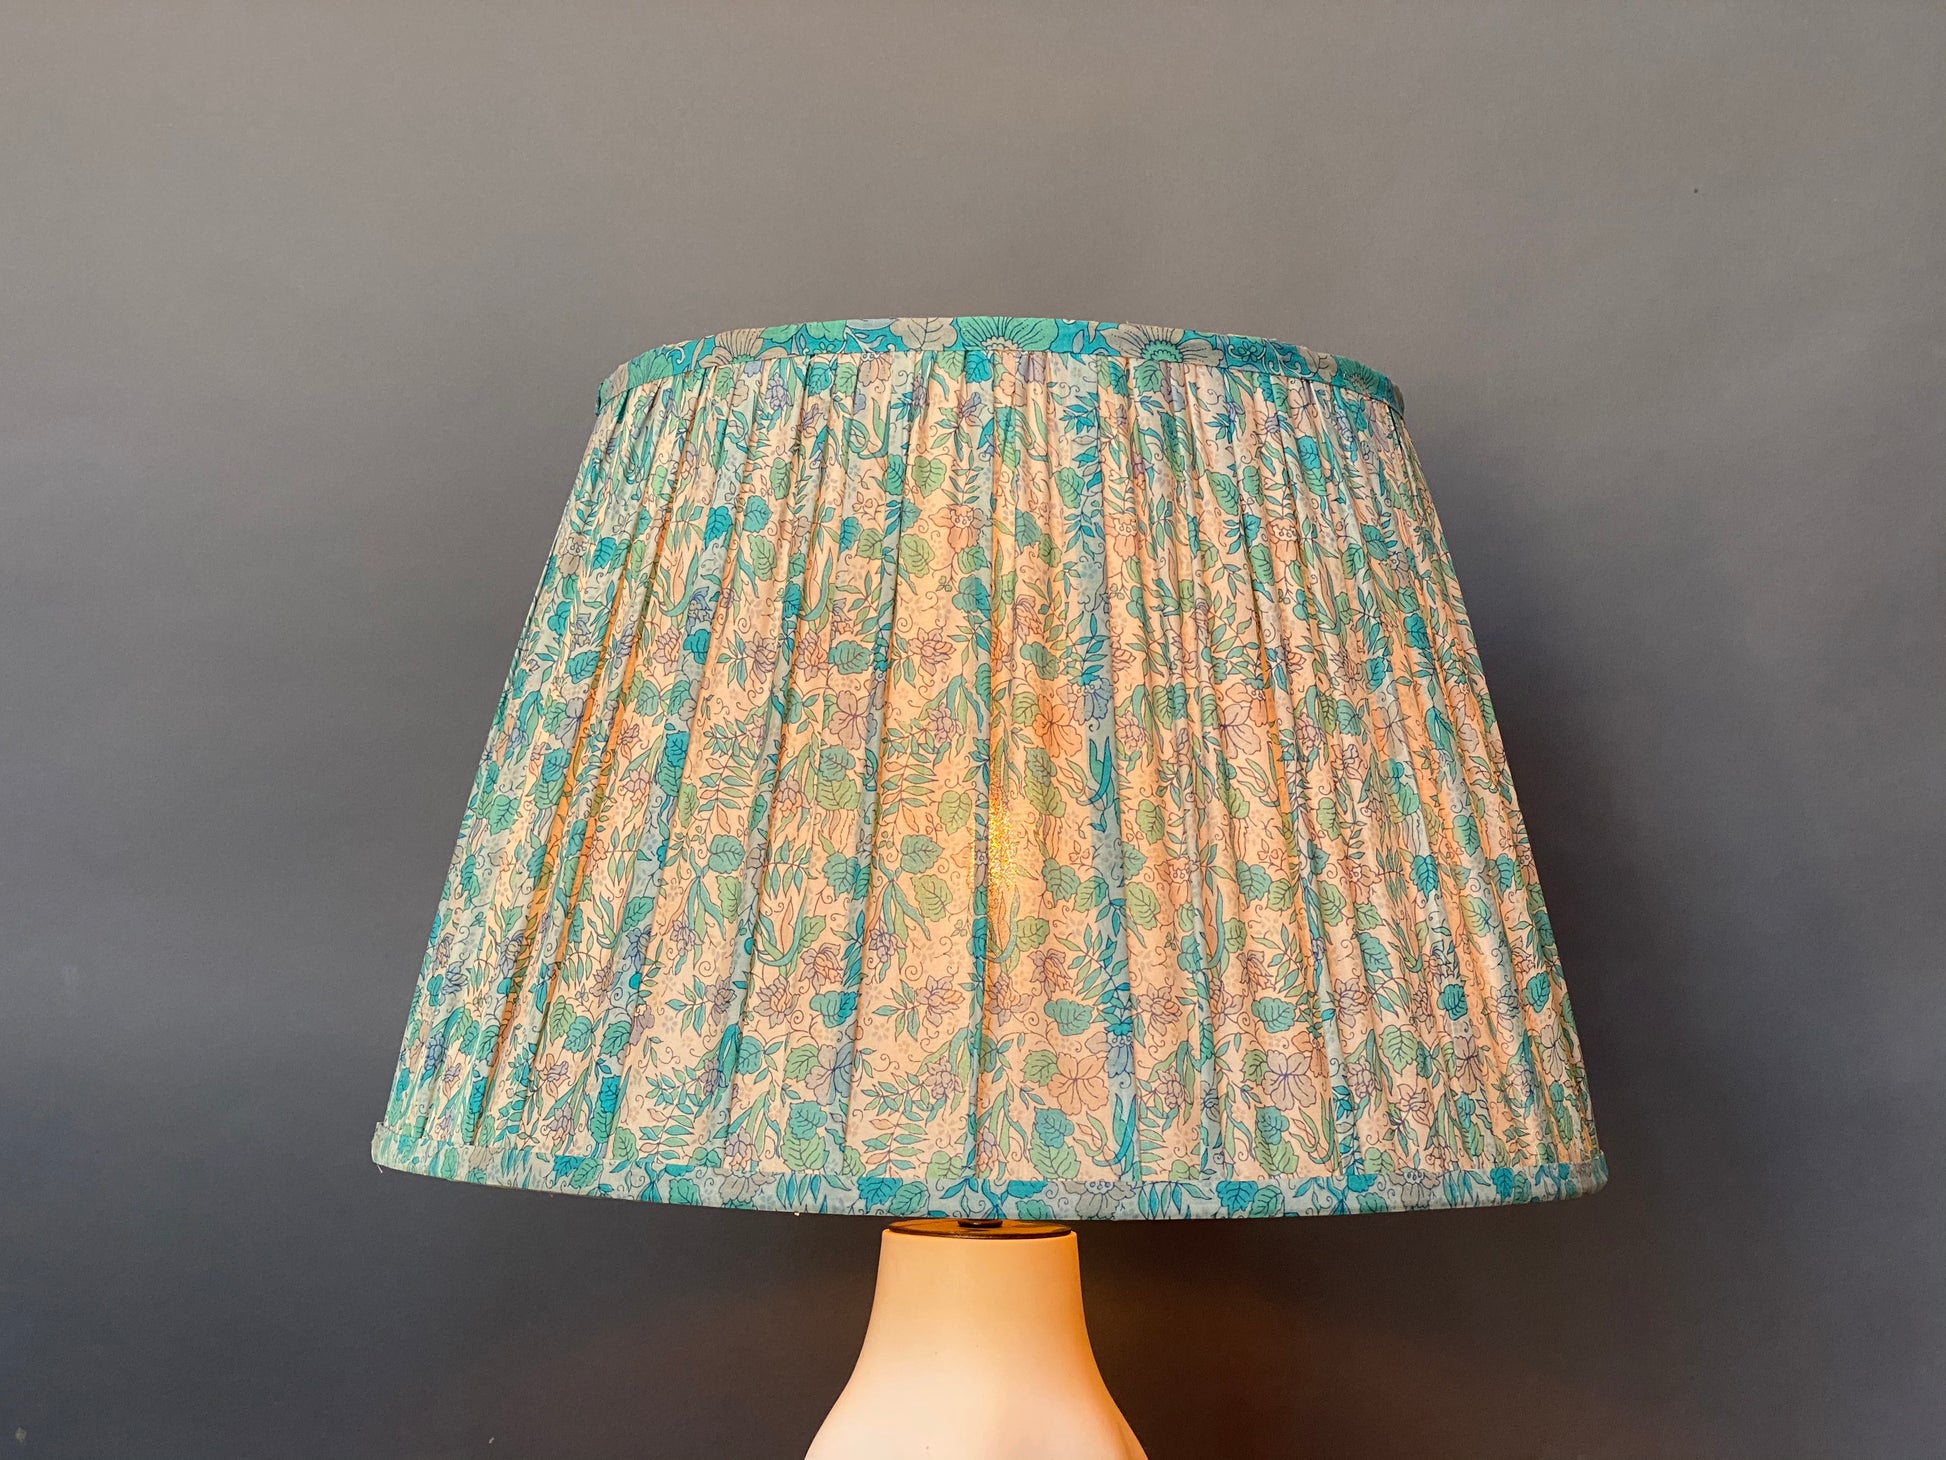 Aqua liberty silk lampshade with light bulb on